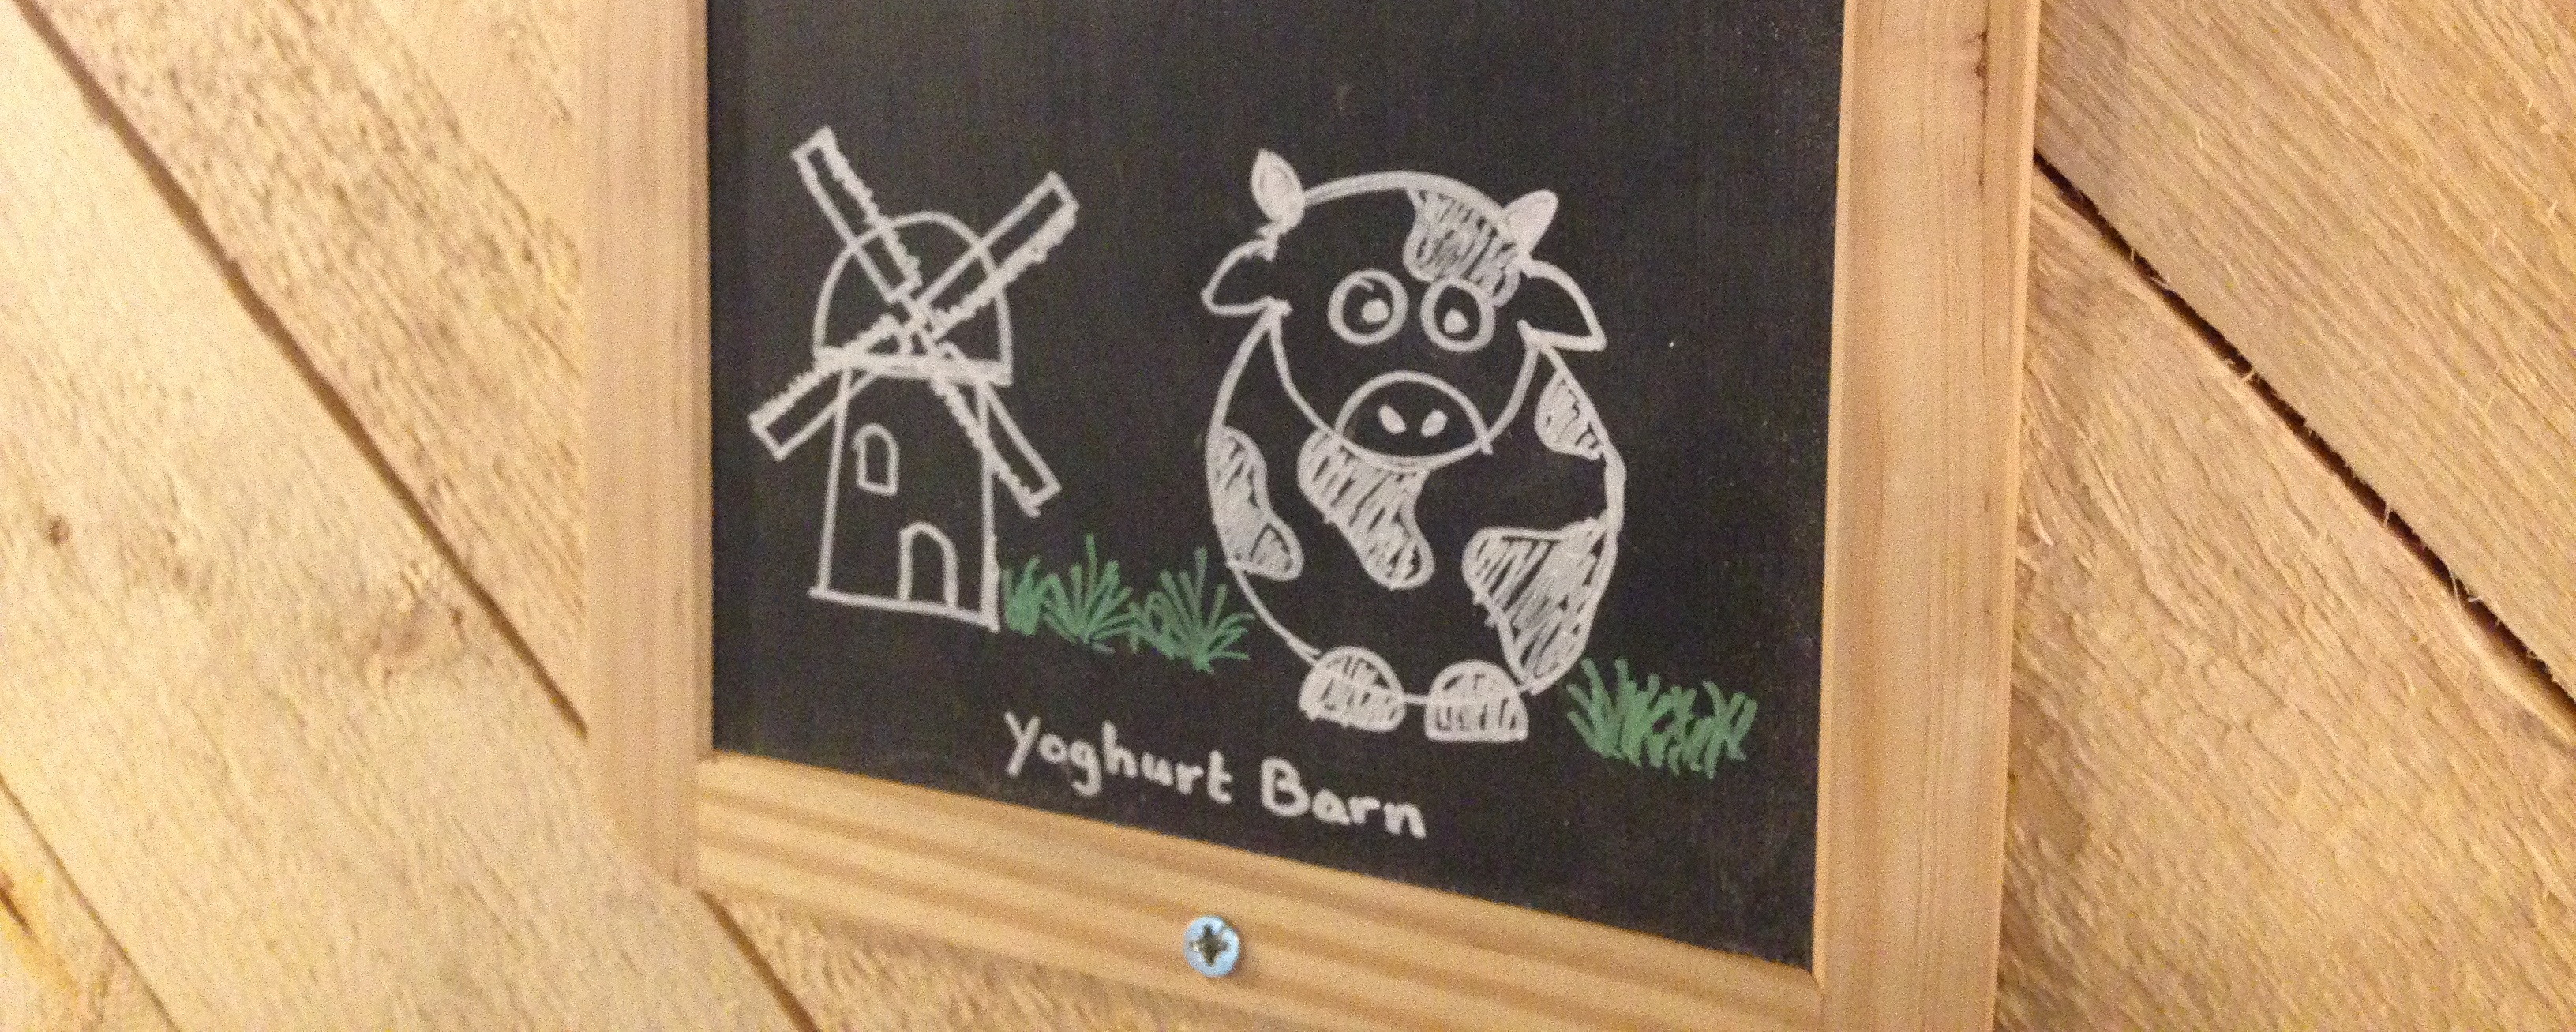 Yoghurt Barn